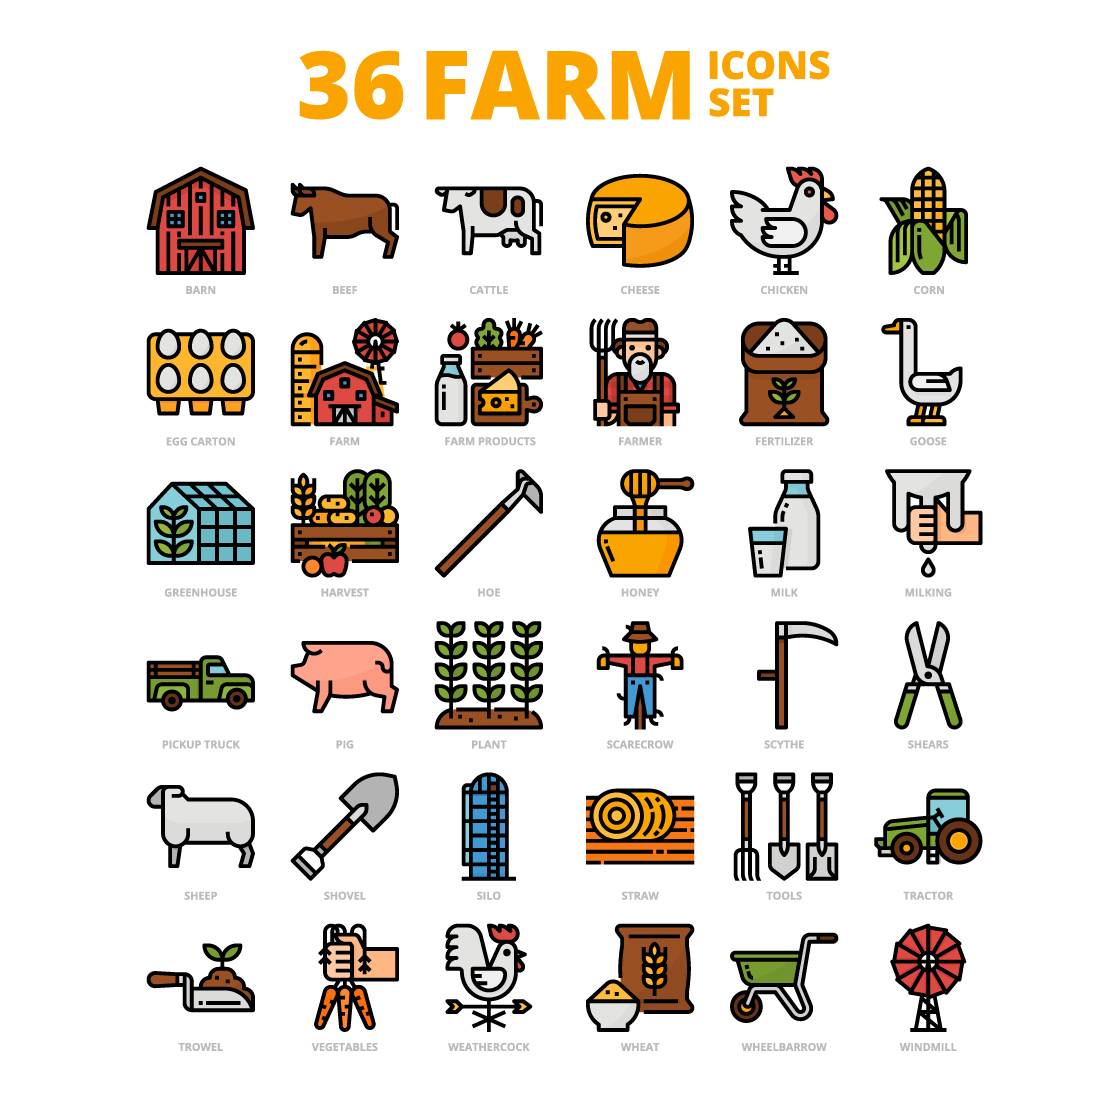 36 Farm Icons Set x 4 Styles cover image.